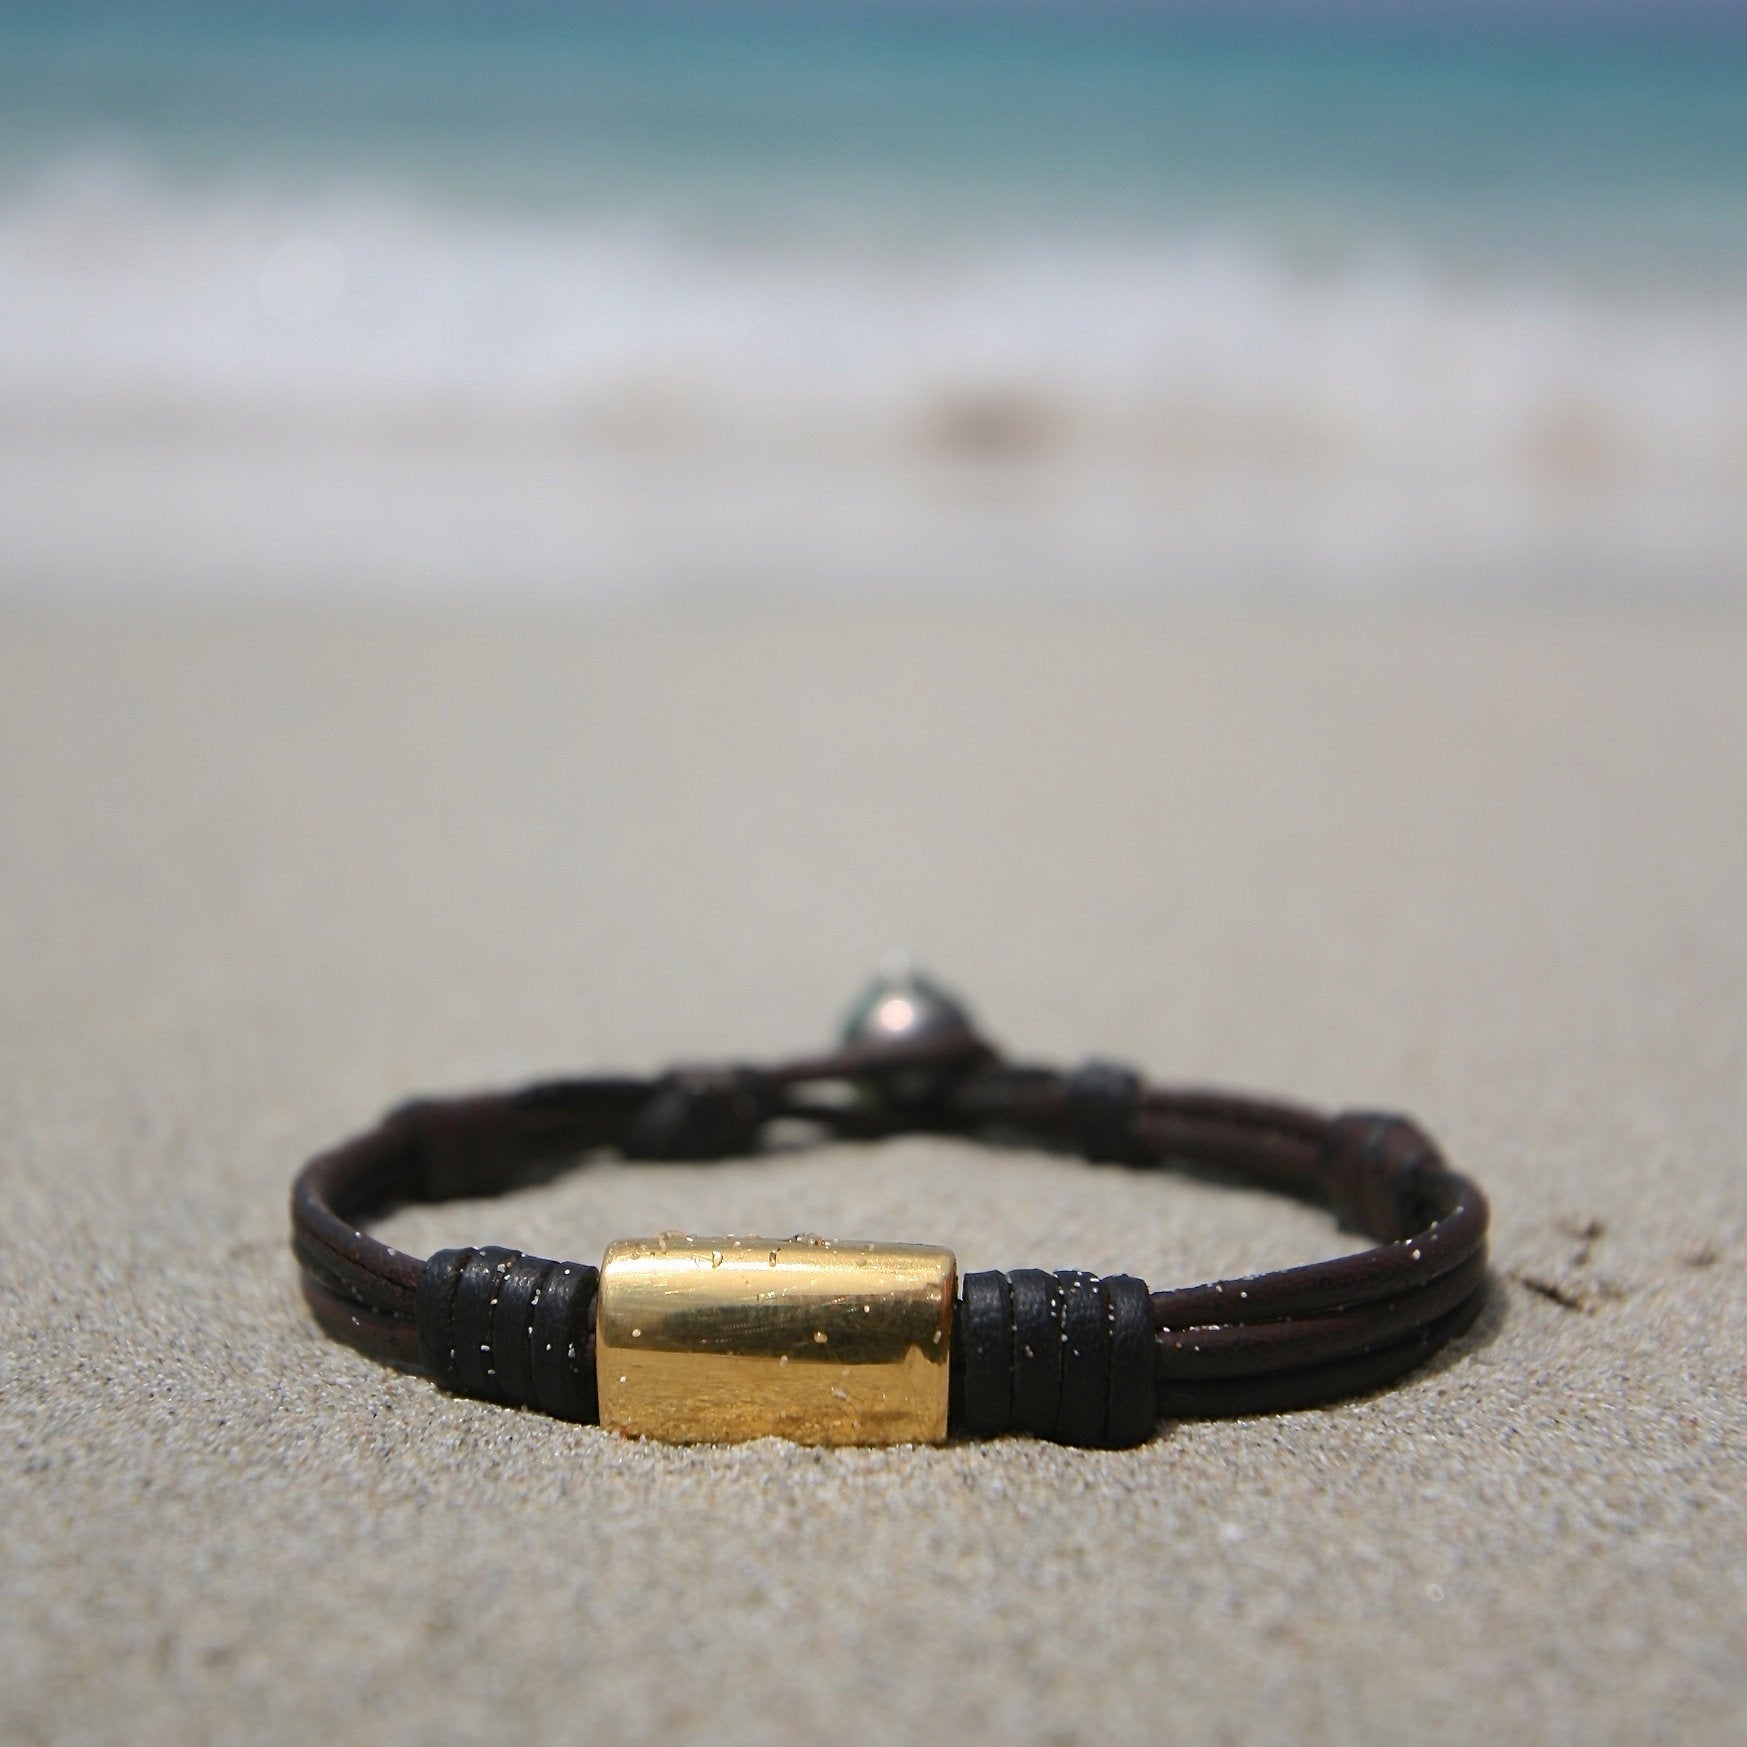 Genuine 18k gold ingot on leather bracelet, chic luxury bracelet jewelry, black Tahitian pearl clasp, St Barths signature, seaside jewelry